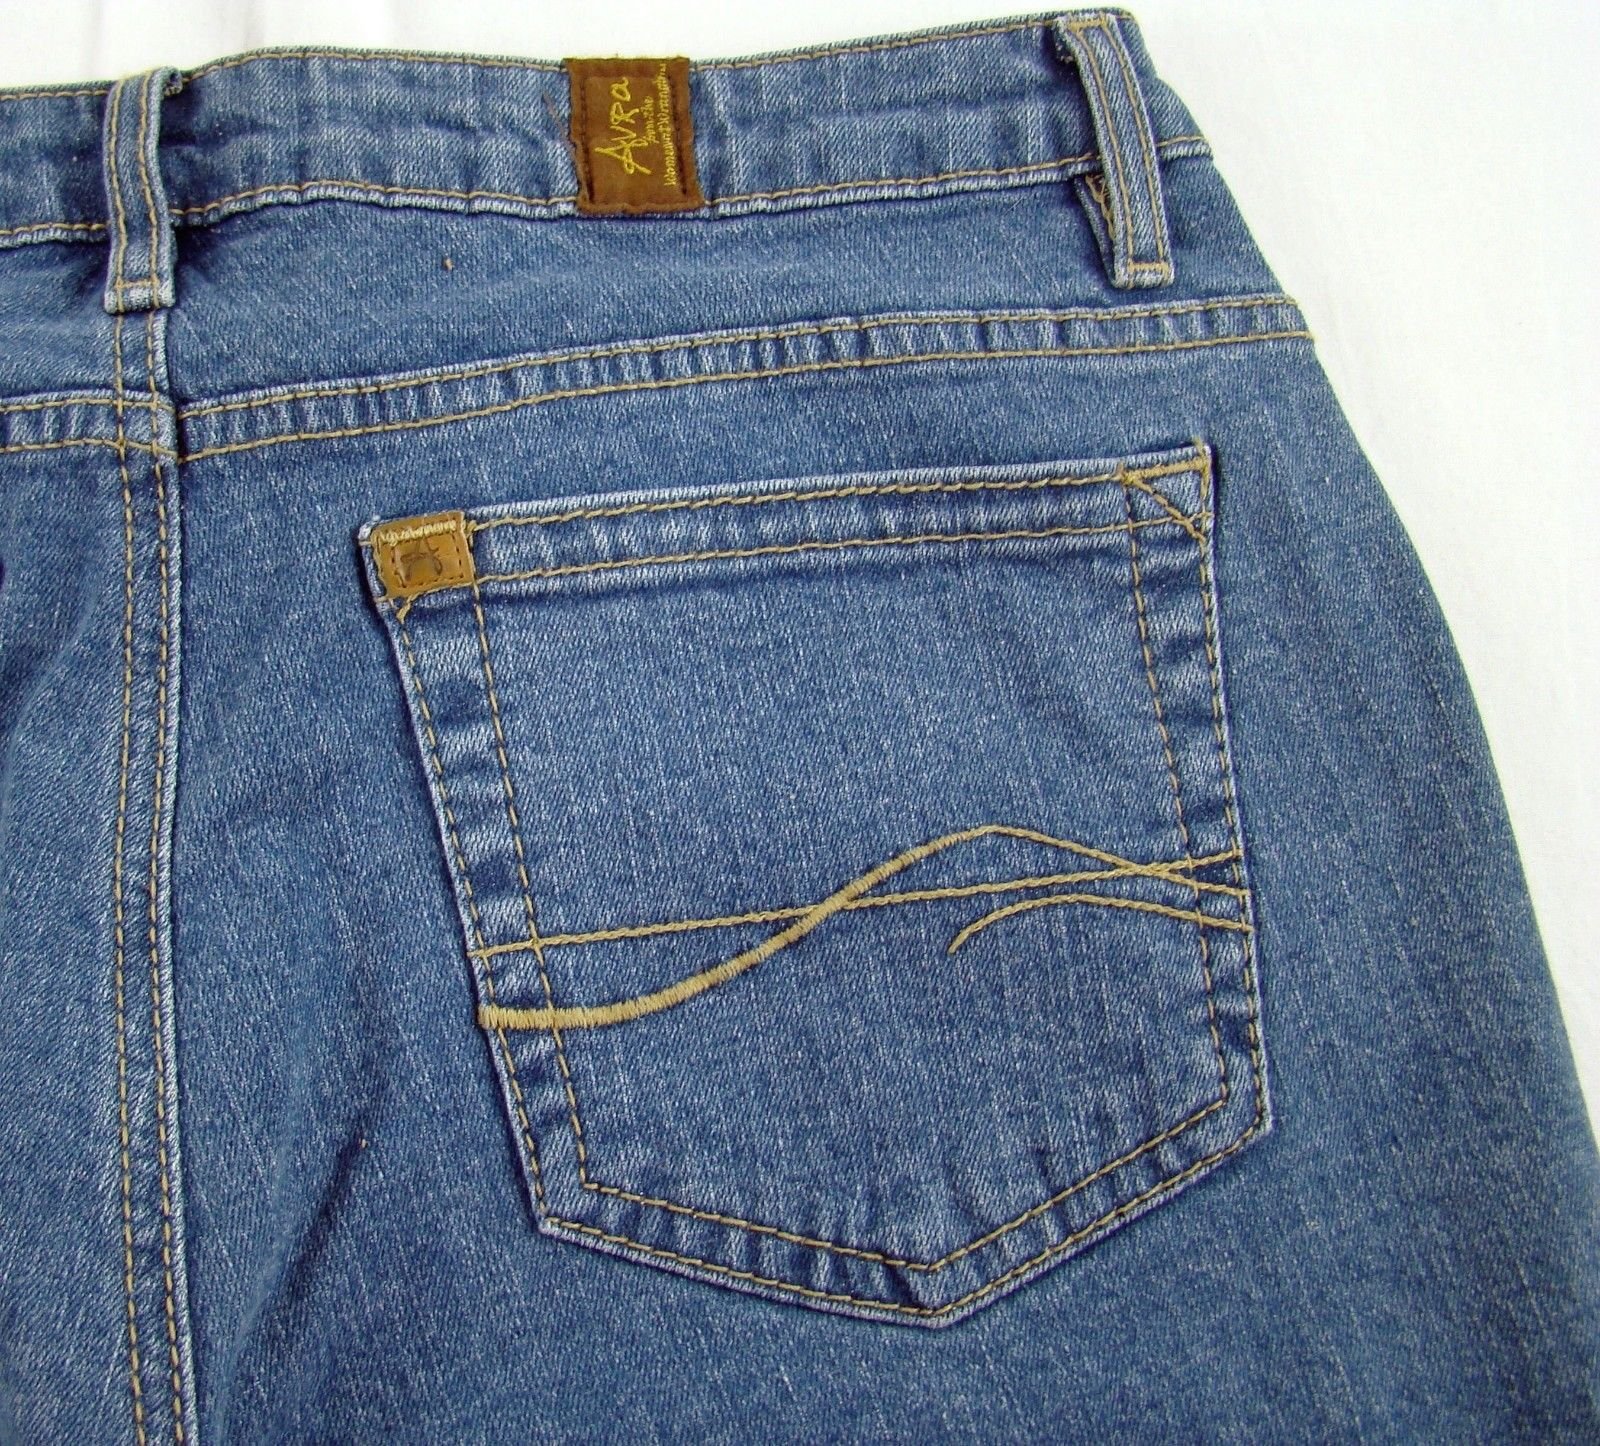 Womens NWT Wrangler Aura Jeans regular rise stretch size 4 x 30 short ...